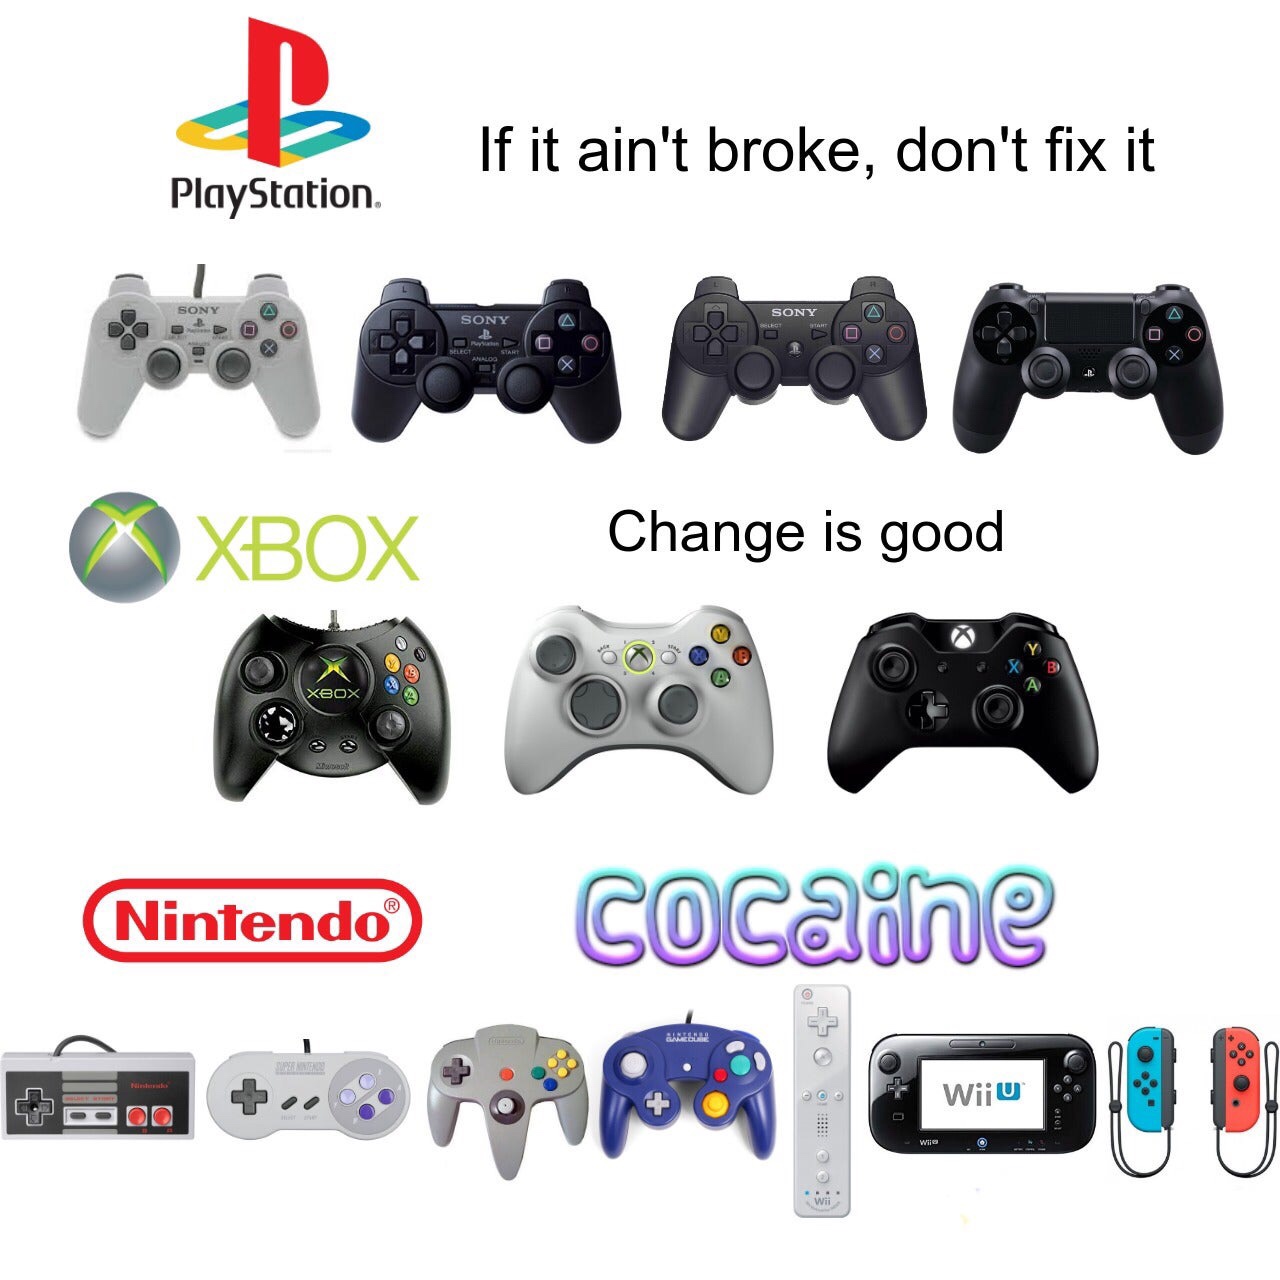 xbox 360 controller - If it ain't broke, don't fix it PlayStation Sony Sony Sony Xbox Change is good e Xbox Nintendo Nintendo cocaine Wii U